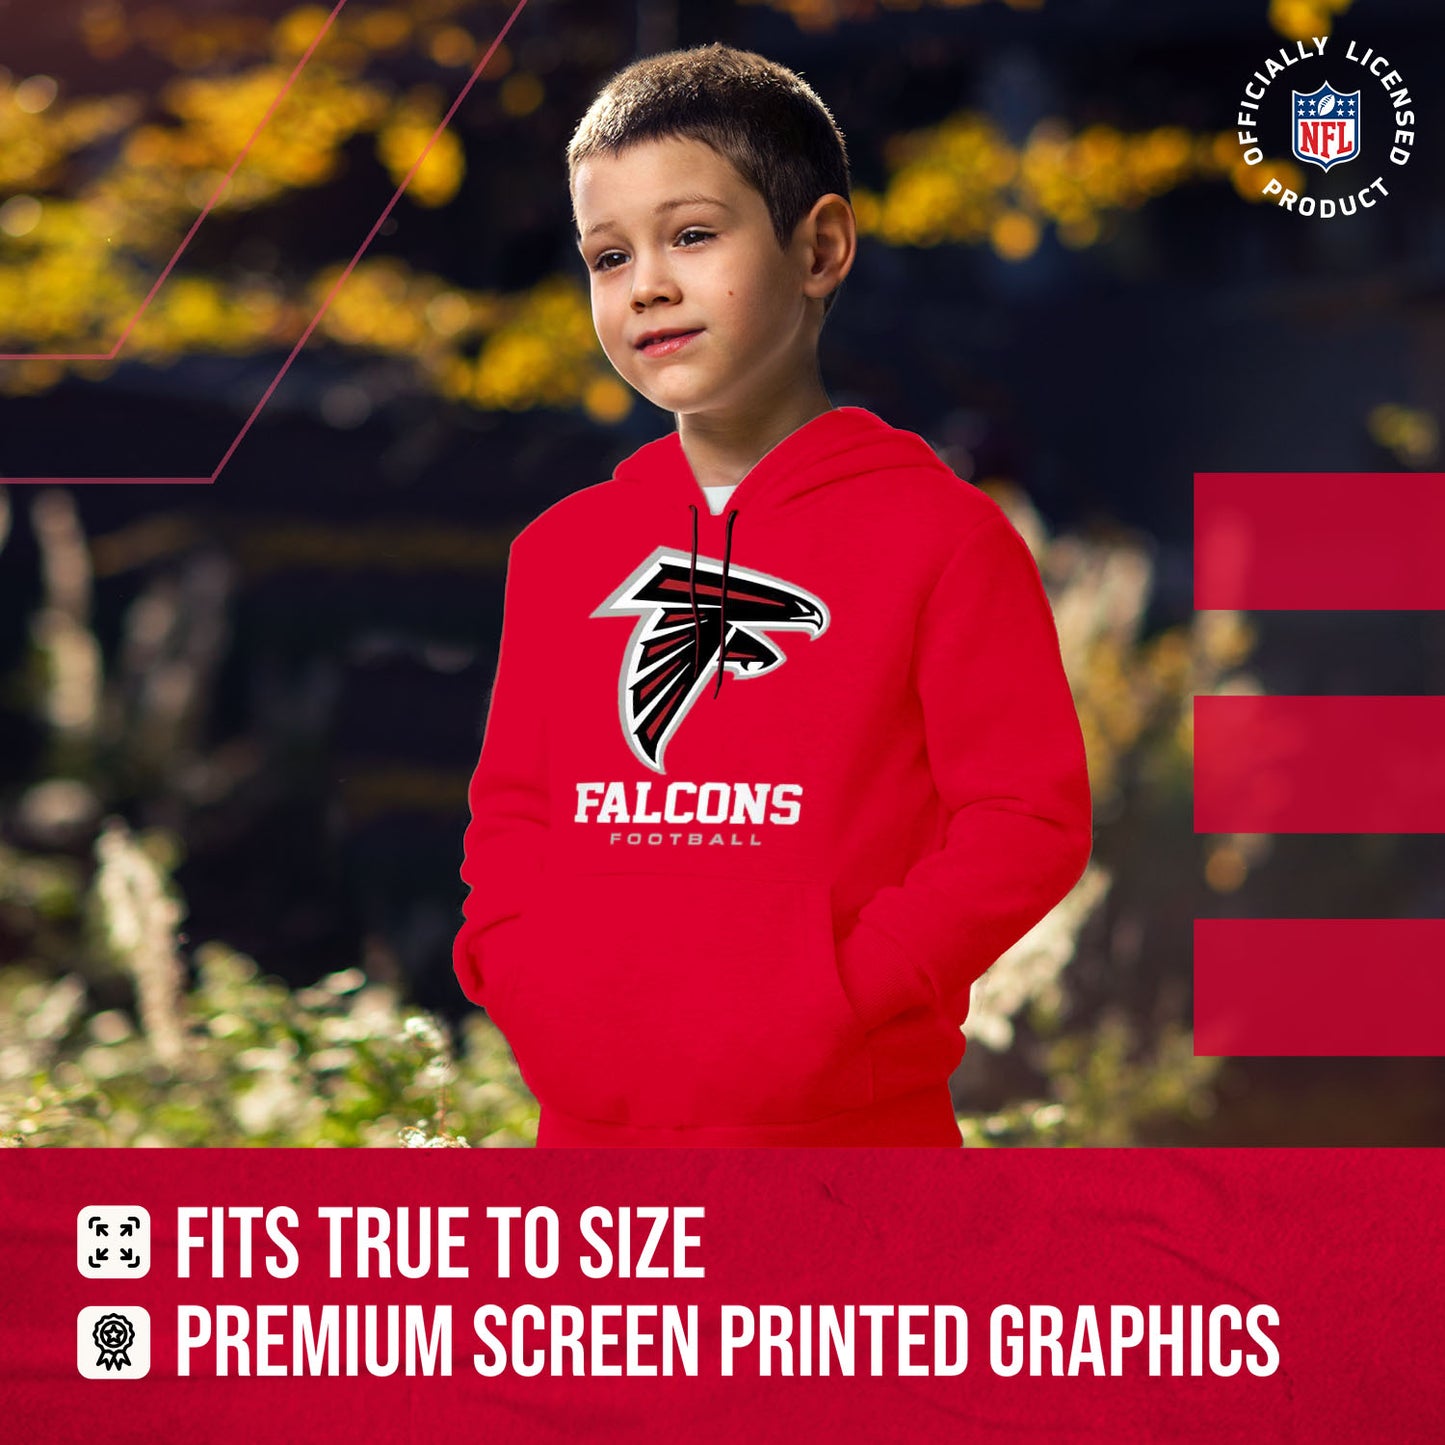 Atlanta Falcons Youth NFL Ultimate Fan Logo Fleece Hooded Sweatshirt -Tagless Football Pullover For Kids - Red